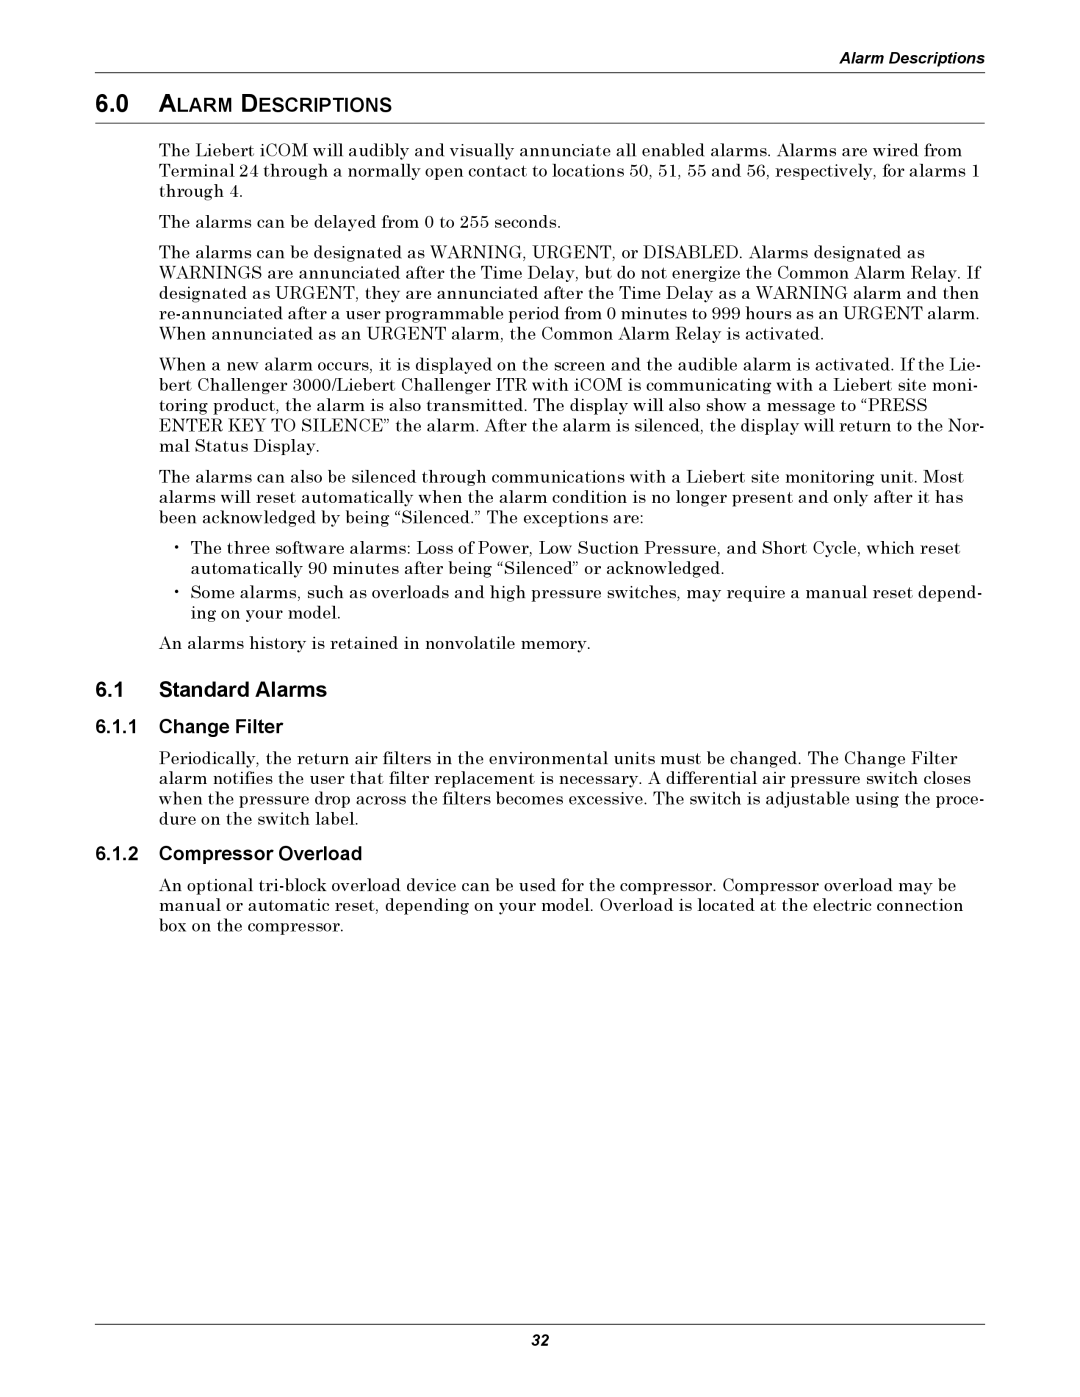 Emerson 3000/ITR manual 6.1Standard Alarms, 6.0ALARM DESCRIPTIONS, 6.1.1Change Filter, 6.1.2Compressor Overload 